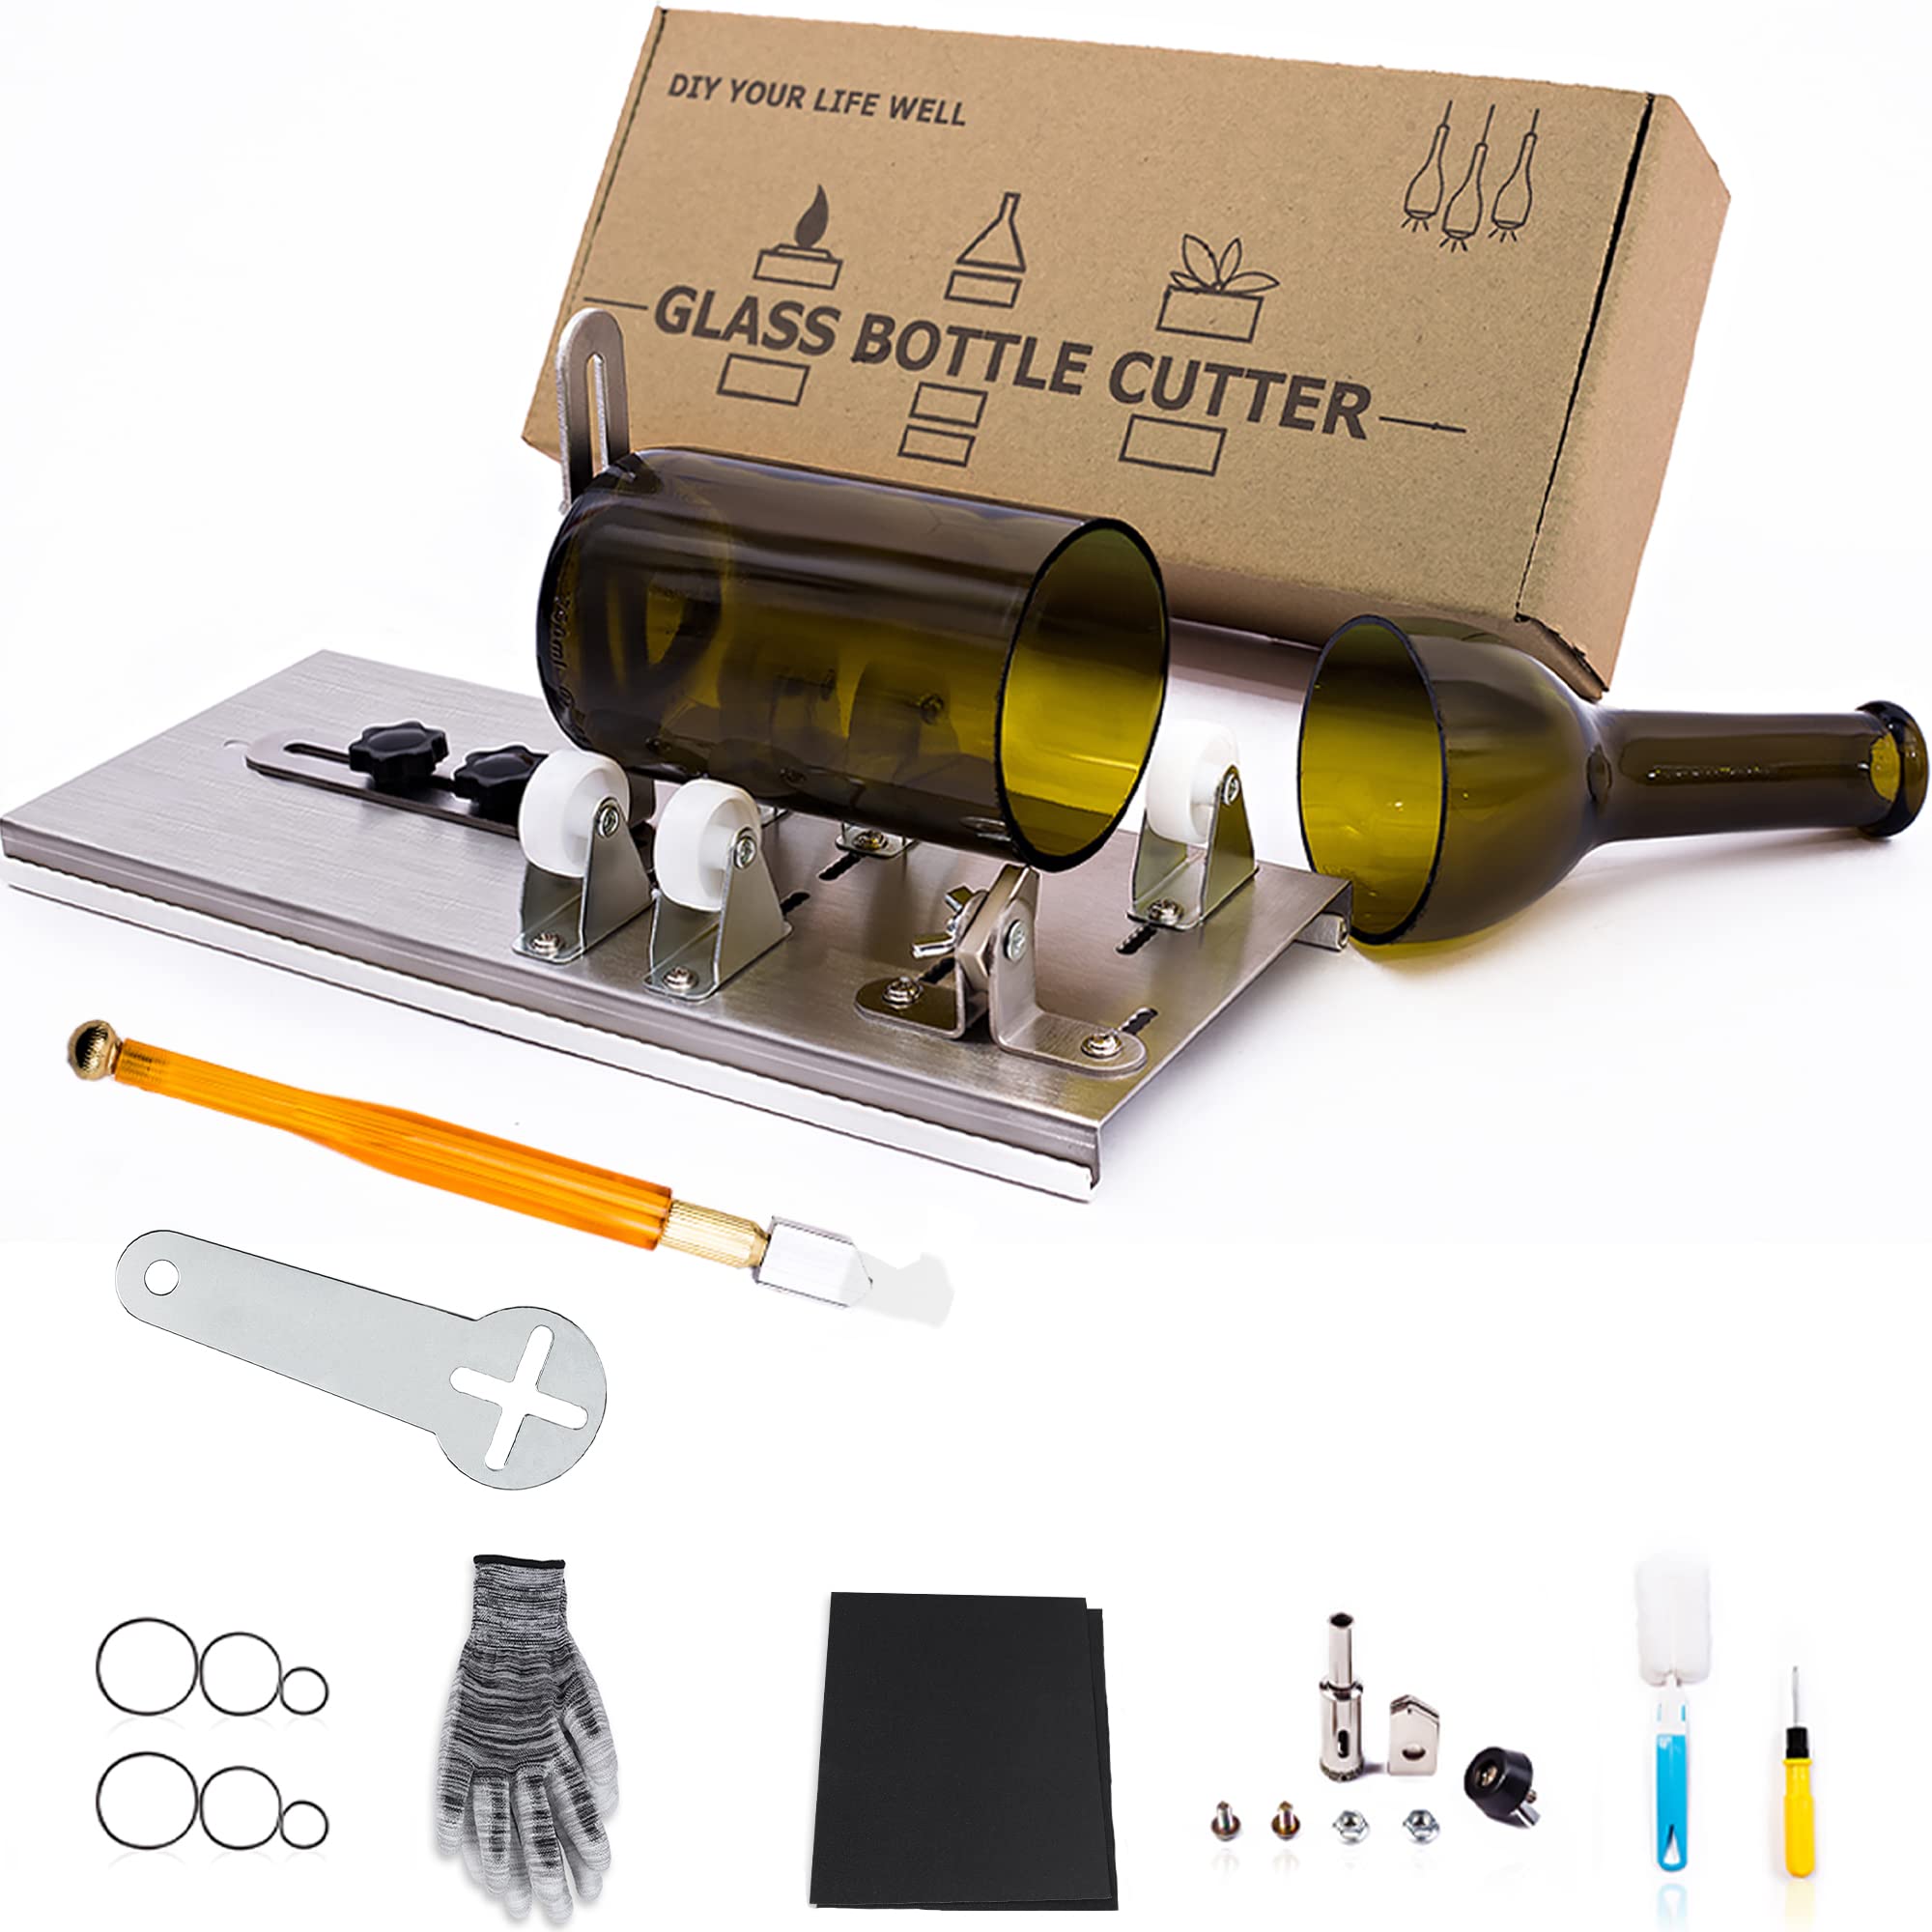 Camdios Bottle Cutter Kit